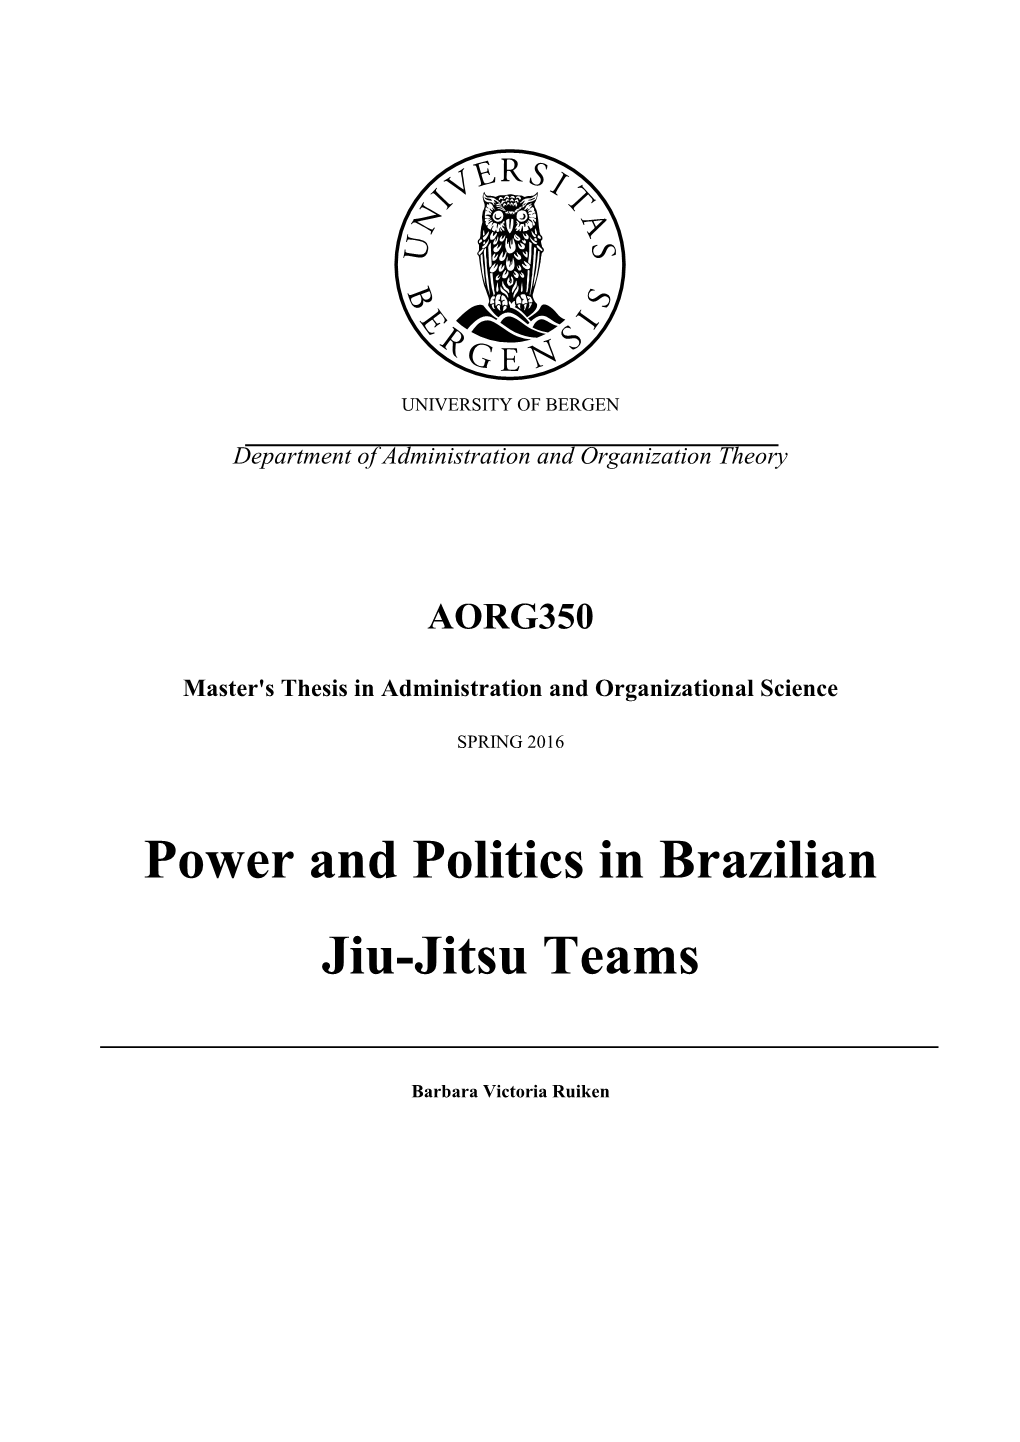 Power and Politics in Brazilian Jiu-Jitsu Teams